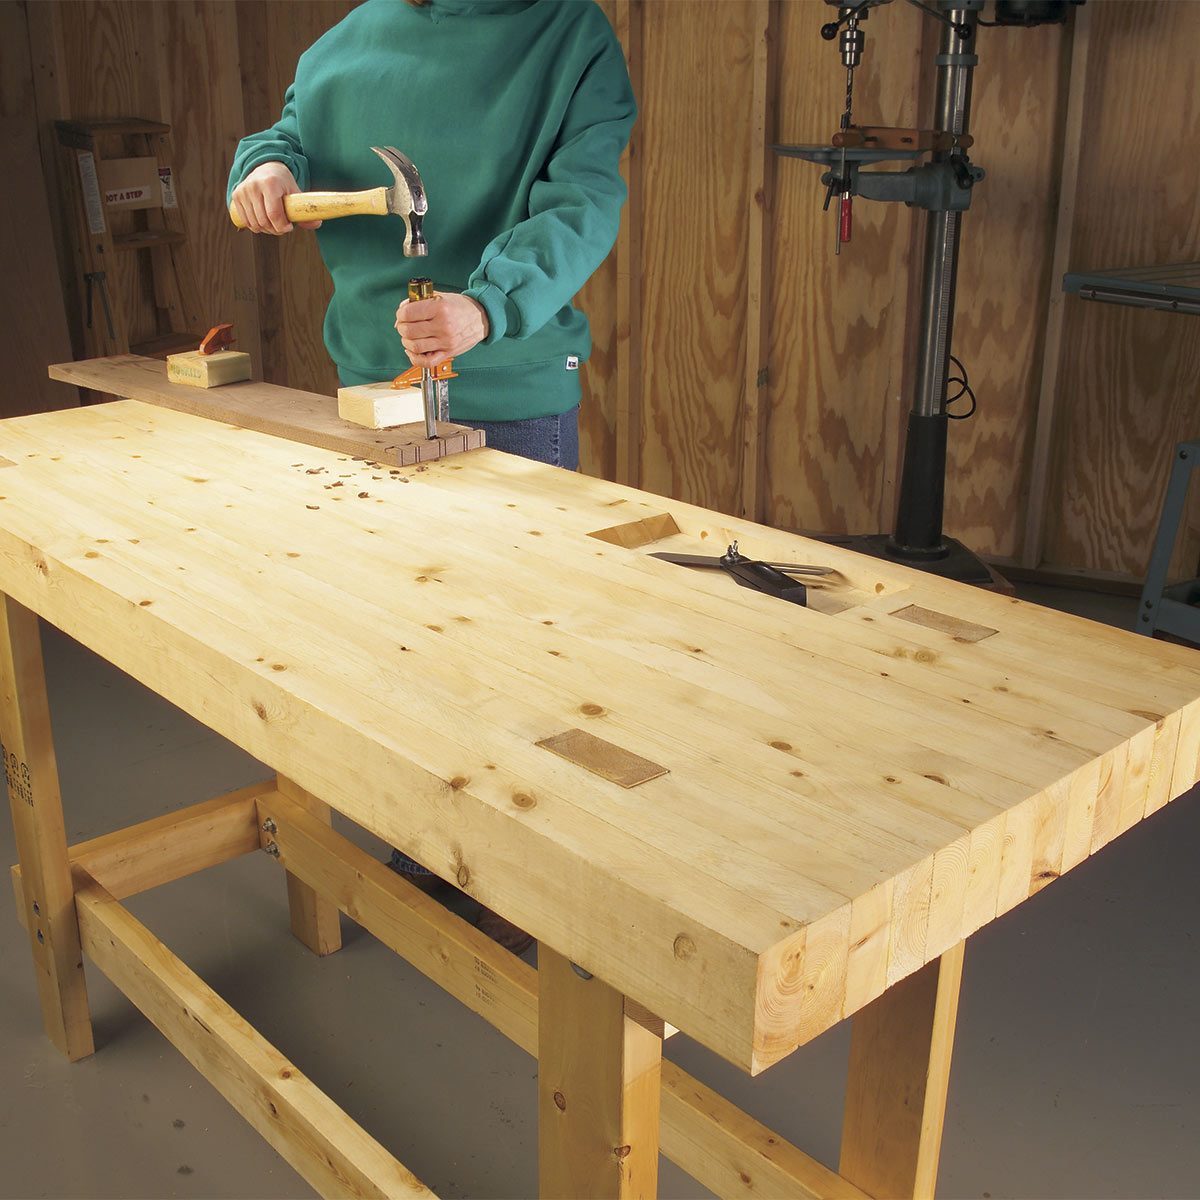 Basic woodworking bench plans free Main Image